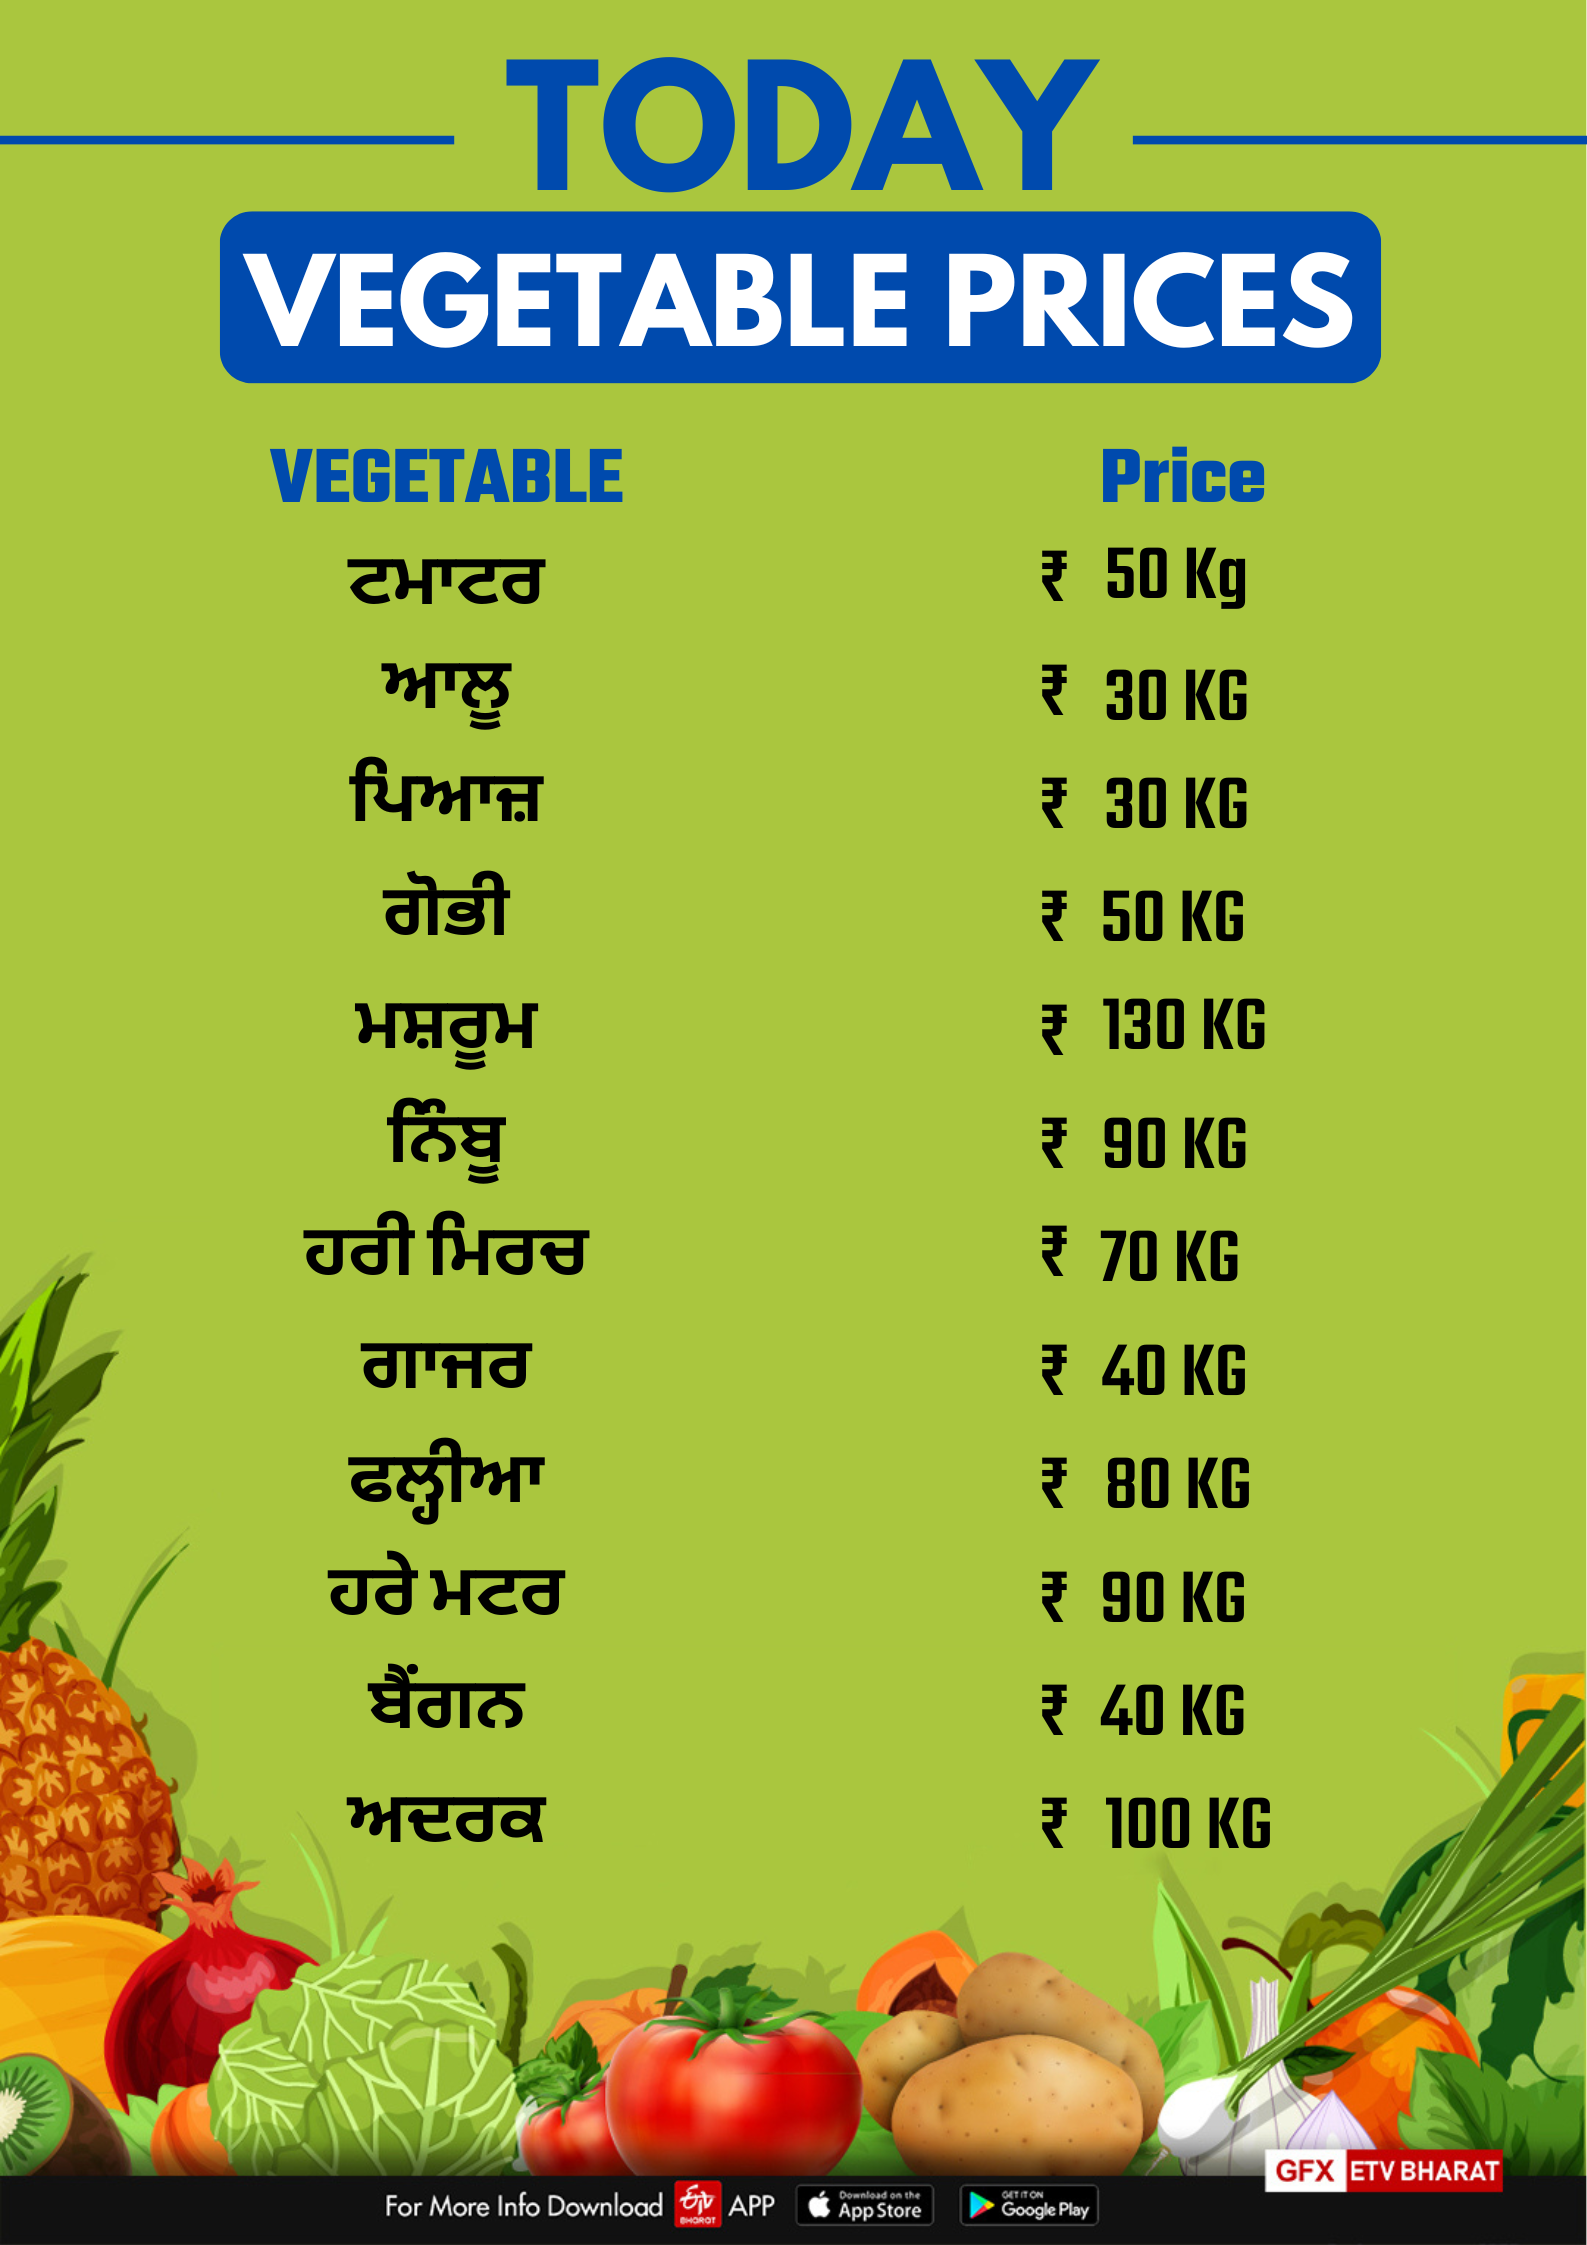 Vegetable rates update